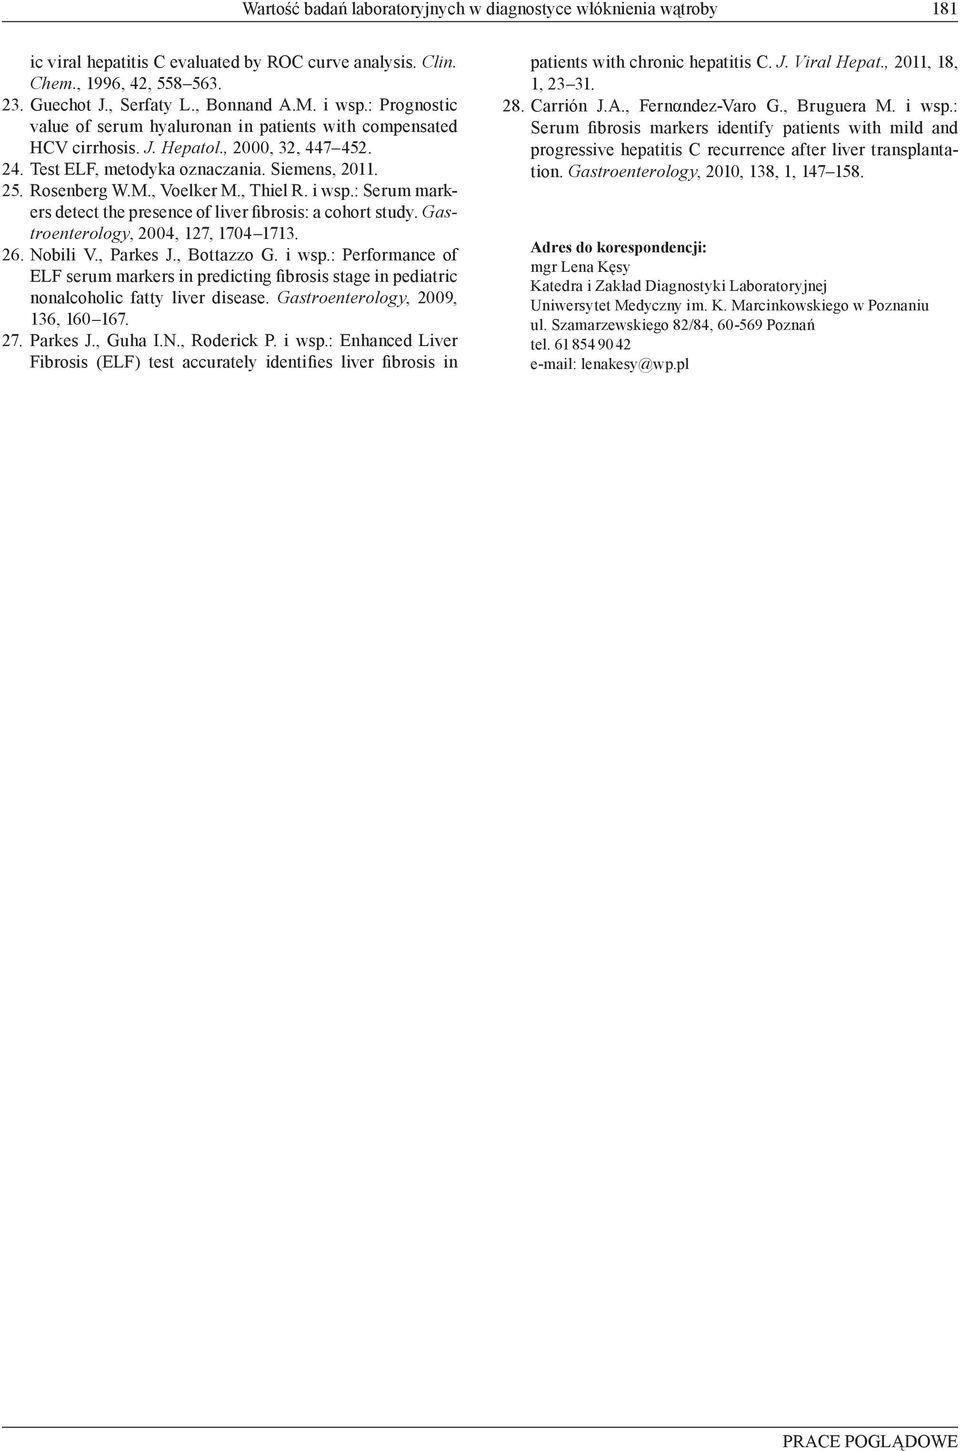 , Thiel R. i wsp.: Serum markers detect the presence of liver fibrosis: a cohort study. Gastroenterology, 2004, 127, 1704 1713. 26. Nobili V., Parkes J., Bottazzo G. i wsp.: Performance of ELF serum markers in predicting fibrosis stage in pediatric nonalcoholic fatty liver disease.